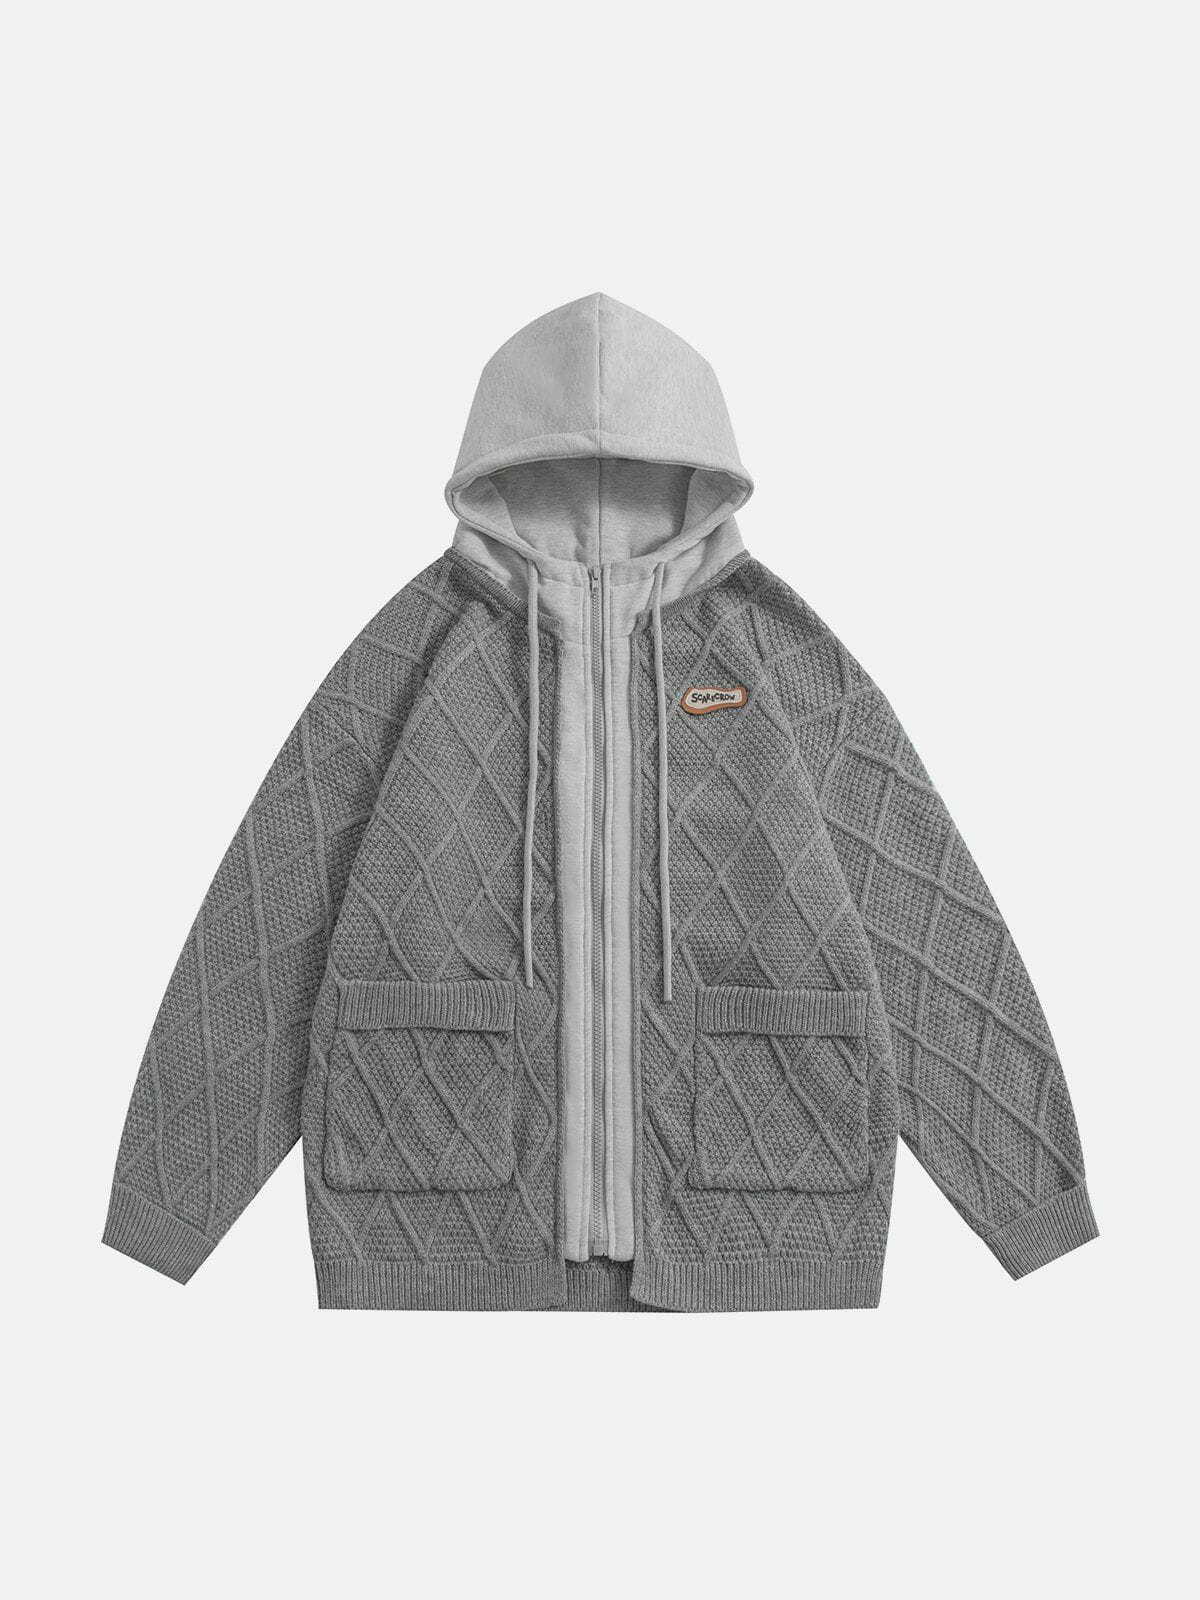 unique duallayer zipup hoodie edgy streetwear 5367